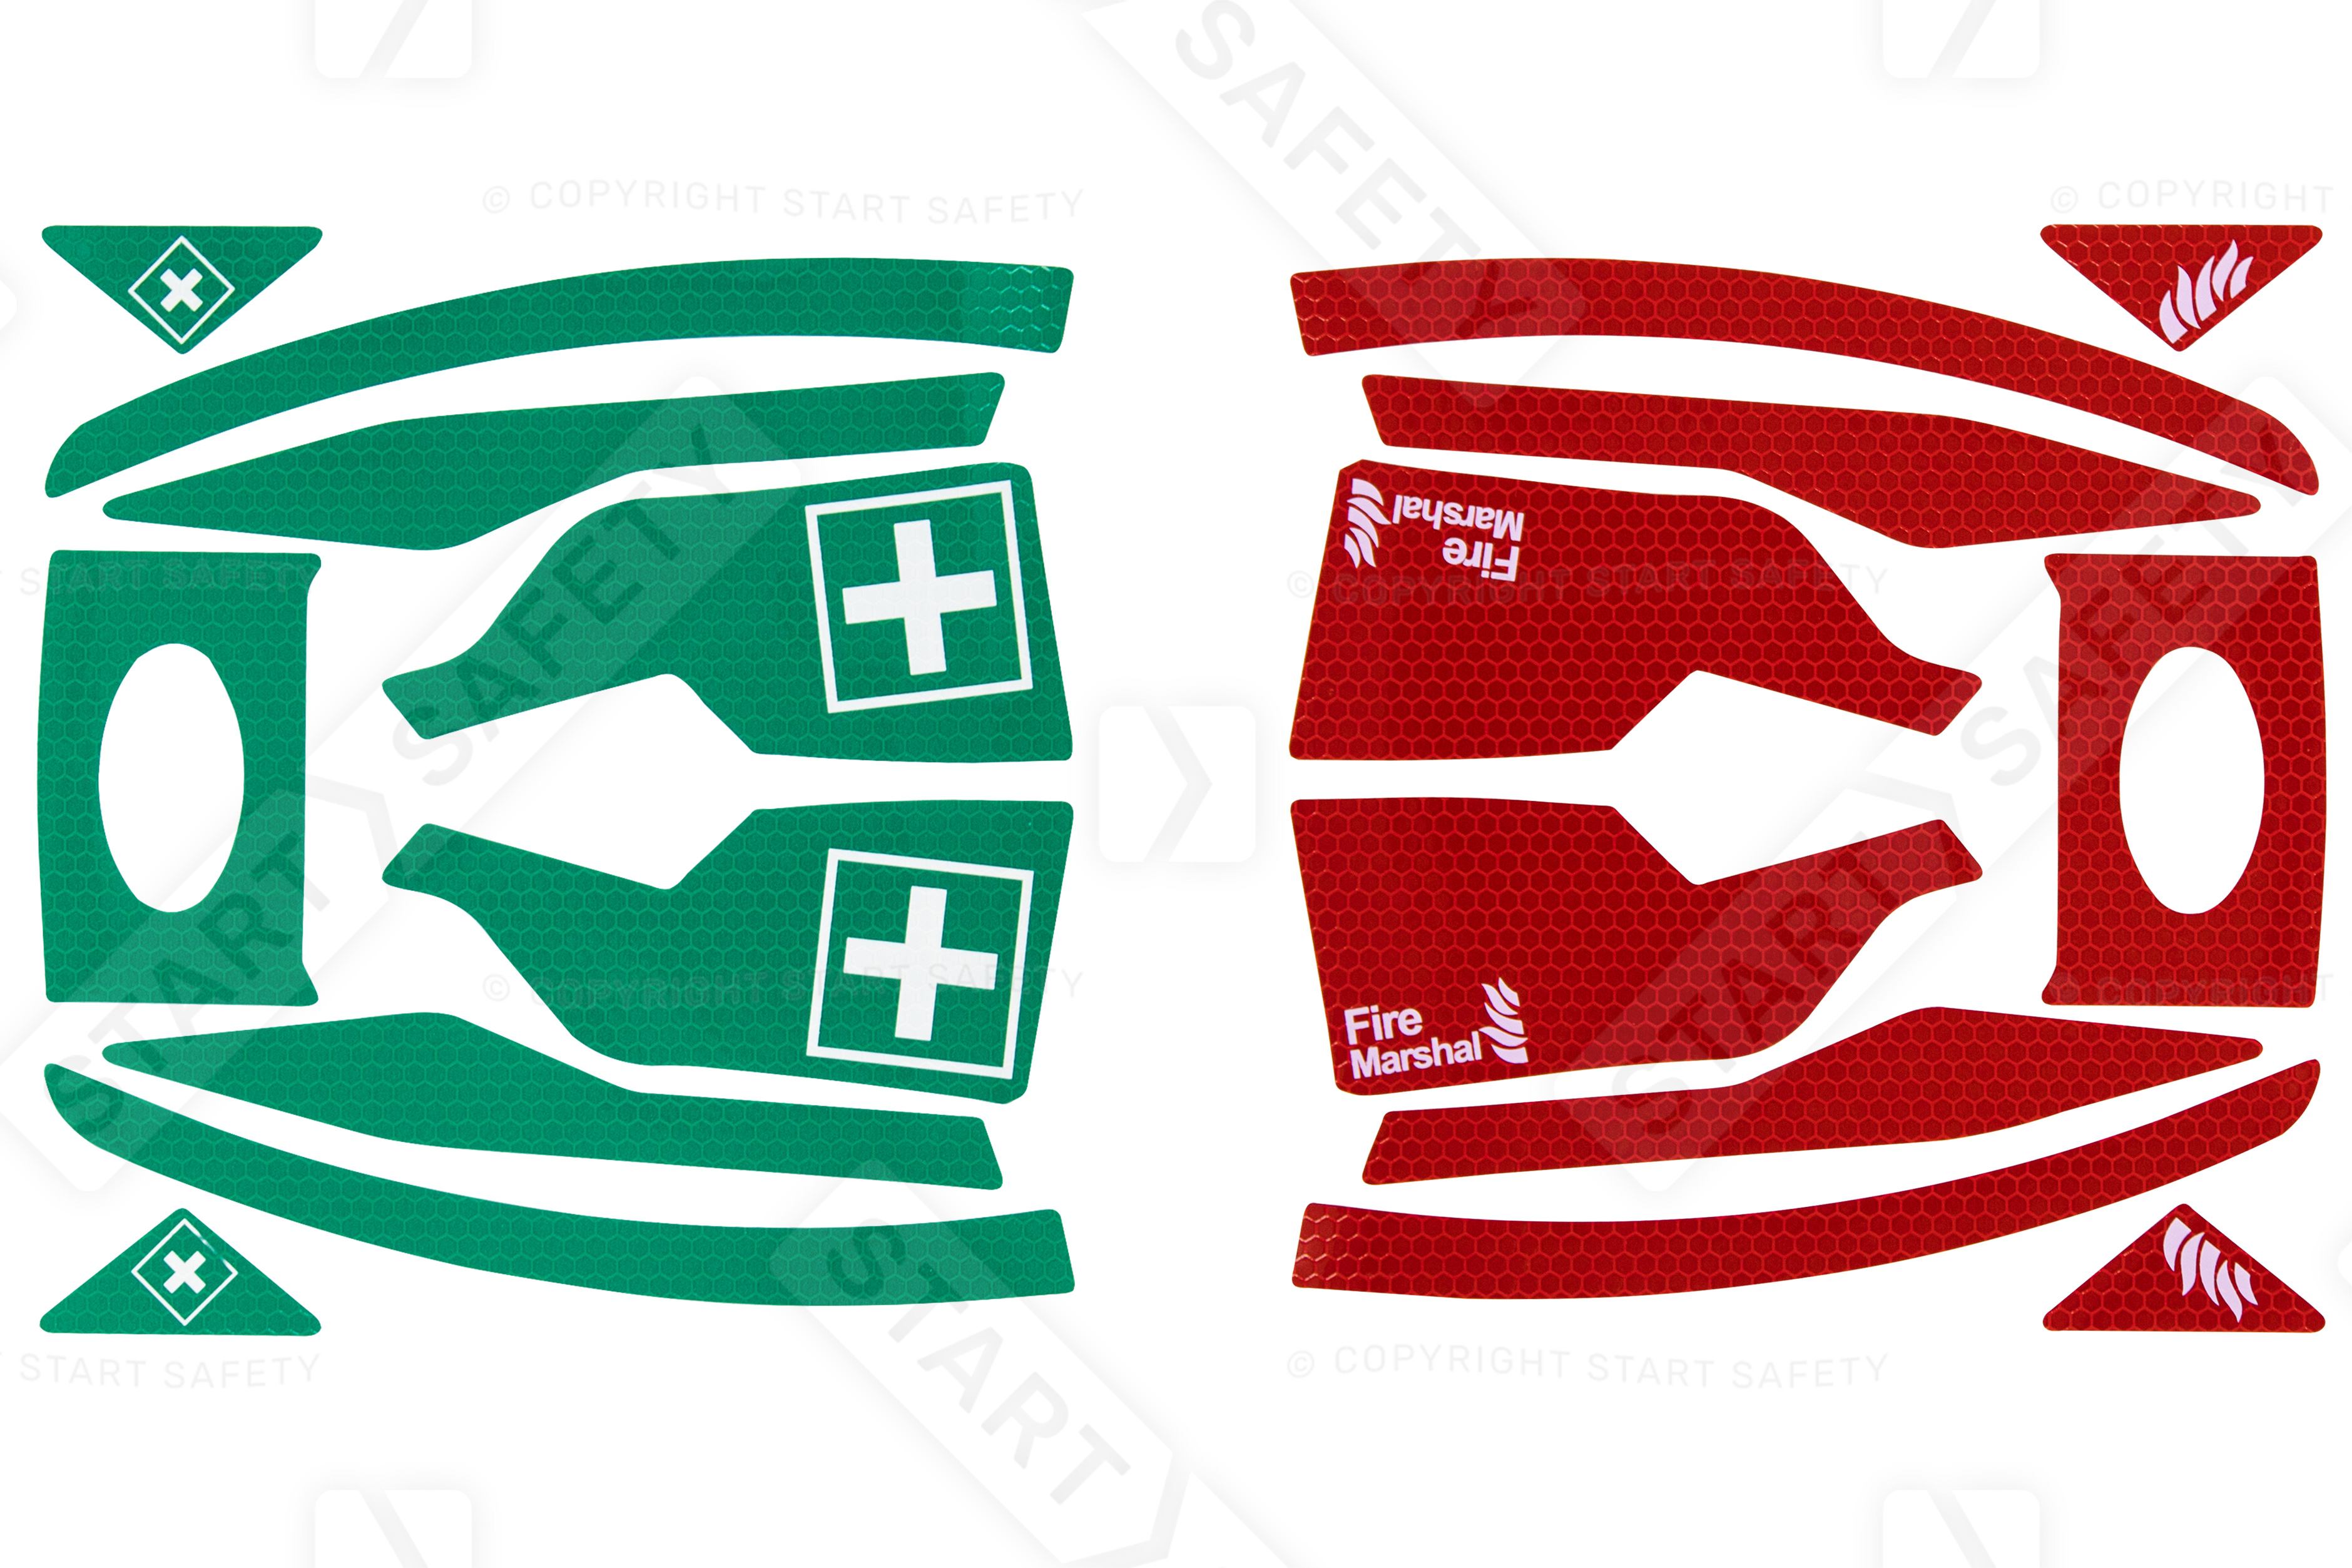 First Aider & Fire Marshall Stickers For Evo Vistalens & Vistashield Safety Helmets